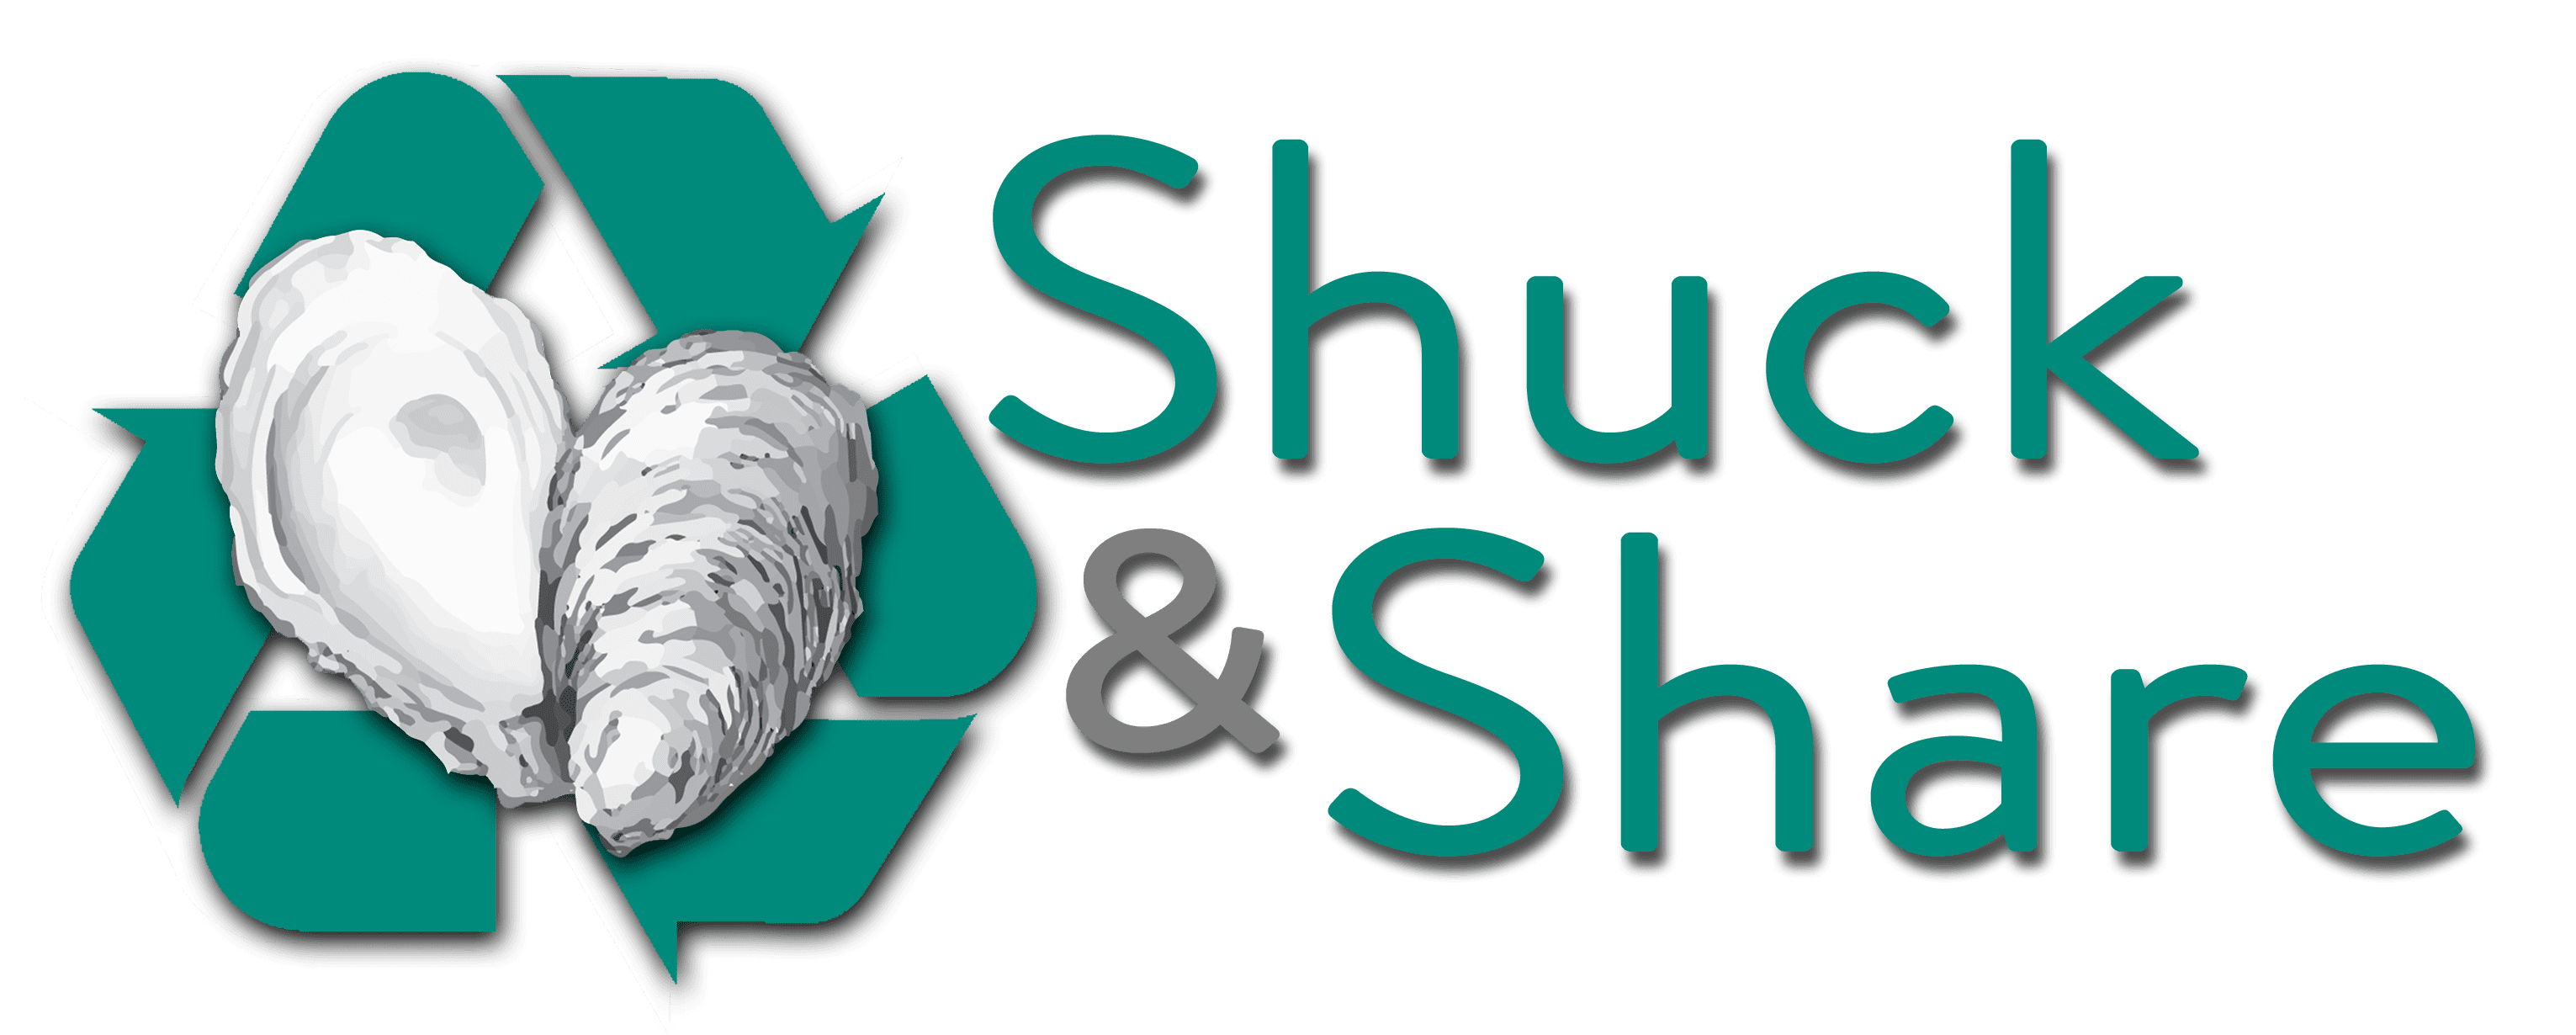 shuck and share logo